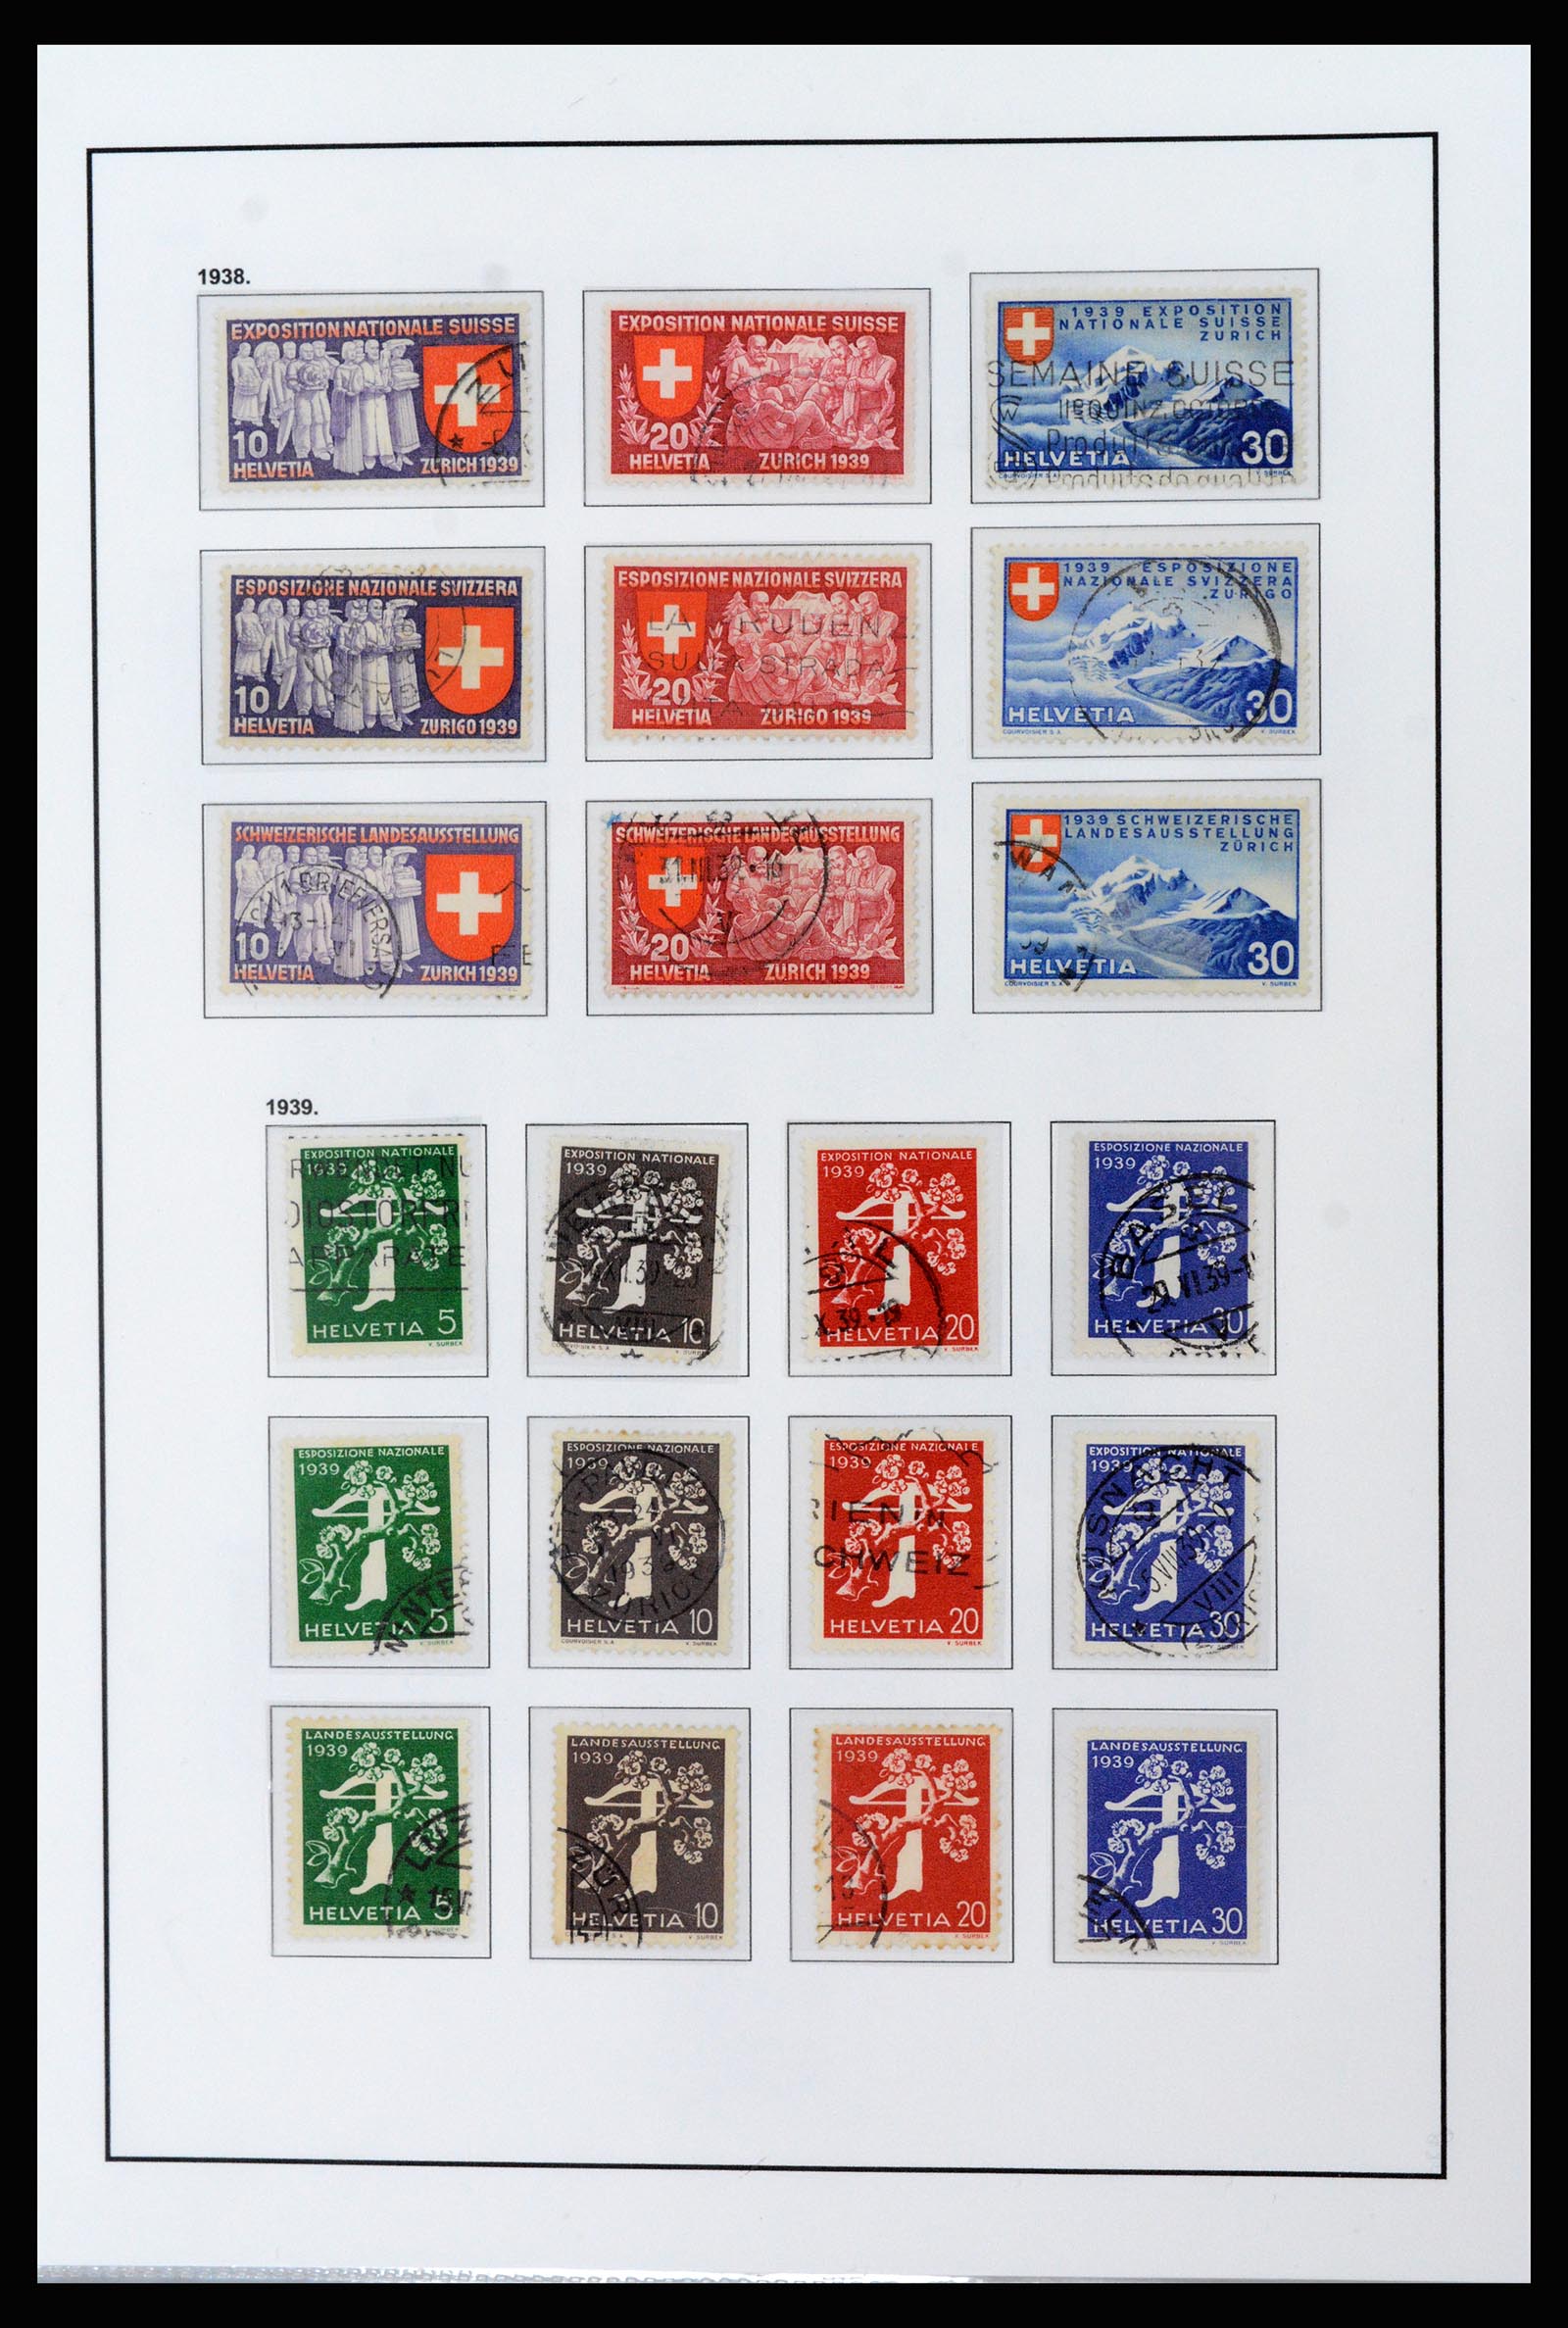 37225 012 - Stamp collection 37225 Switzerland 1854-2020.